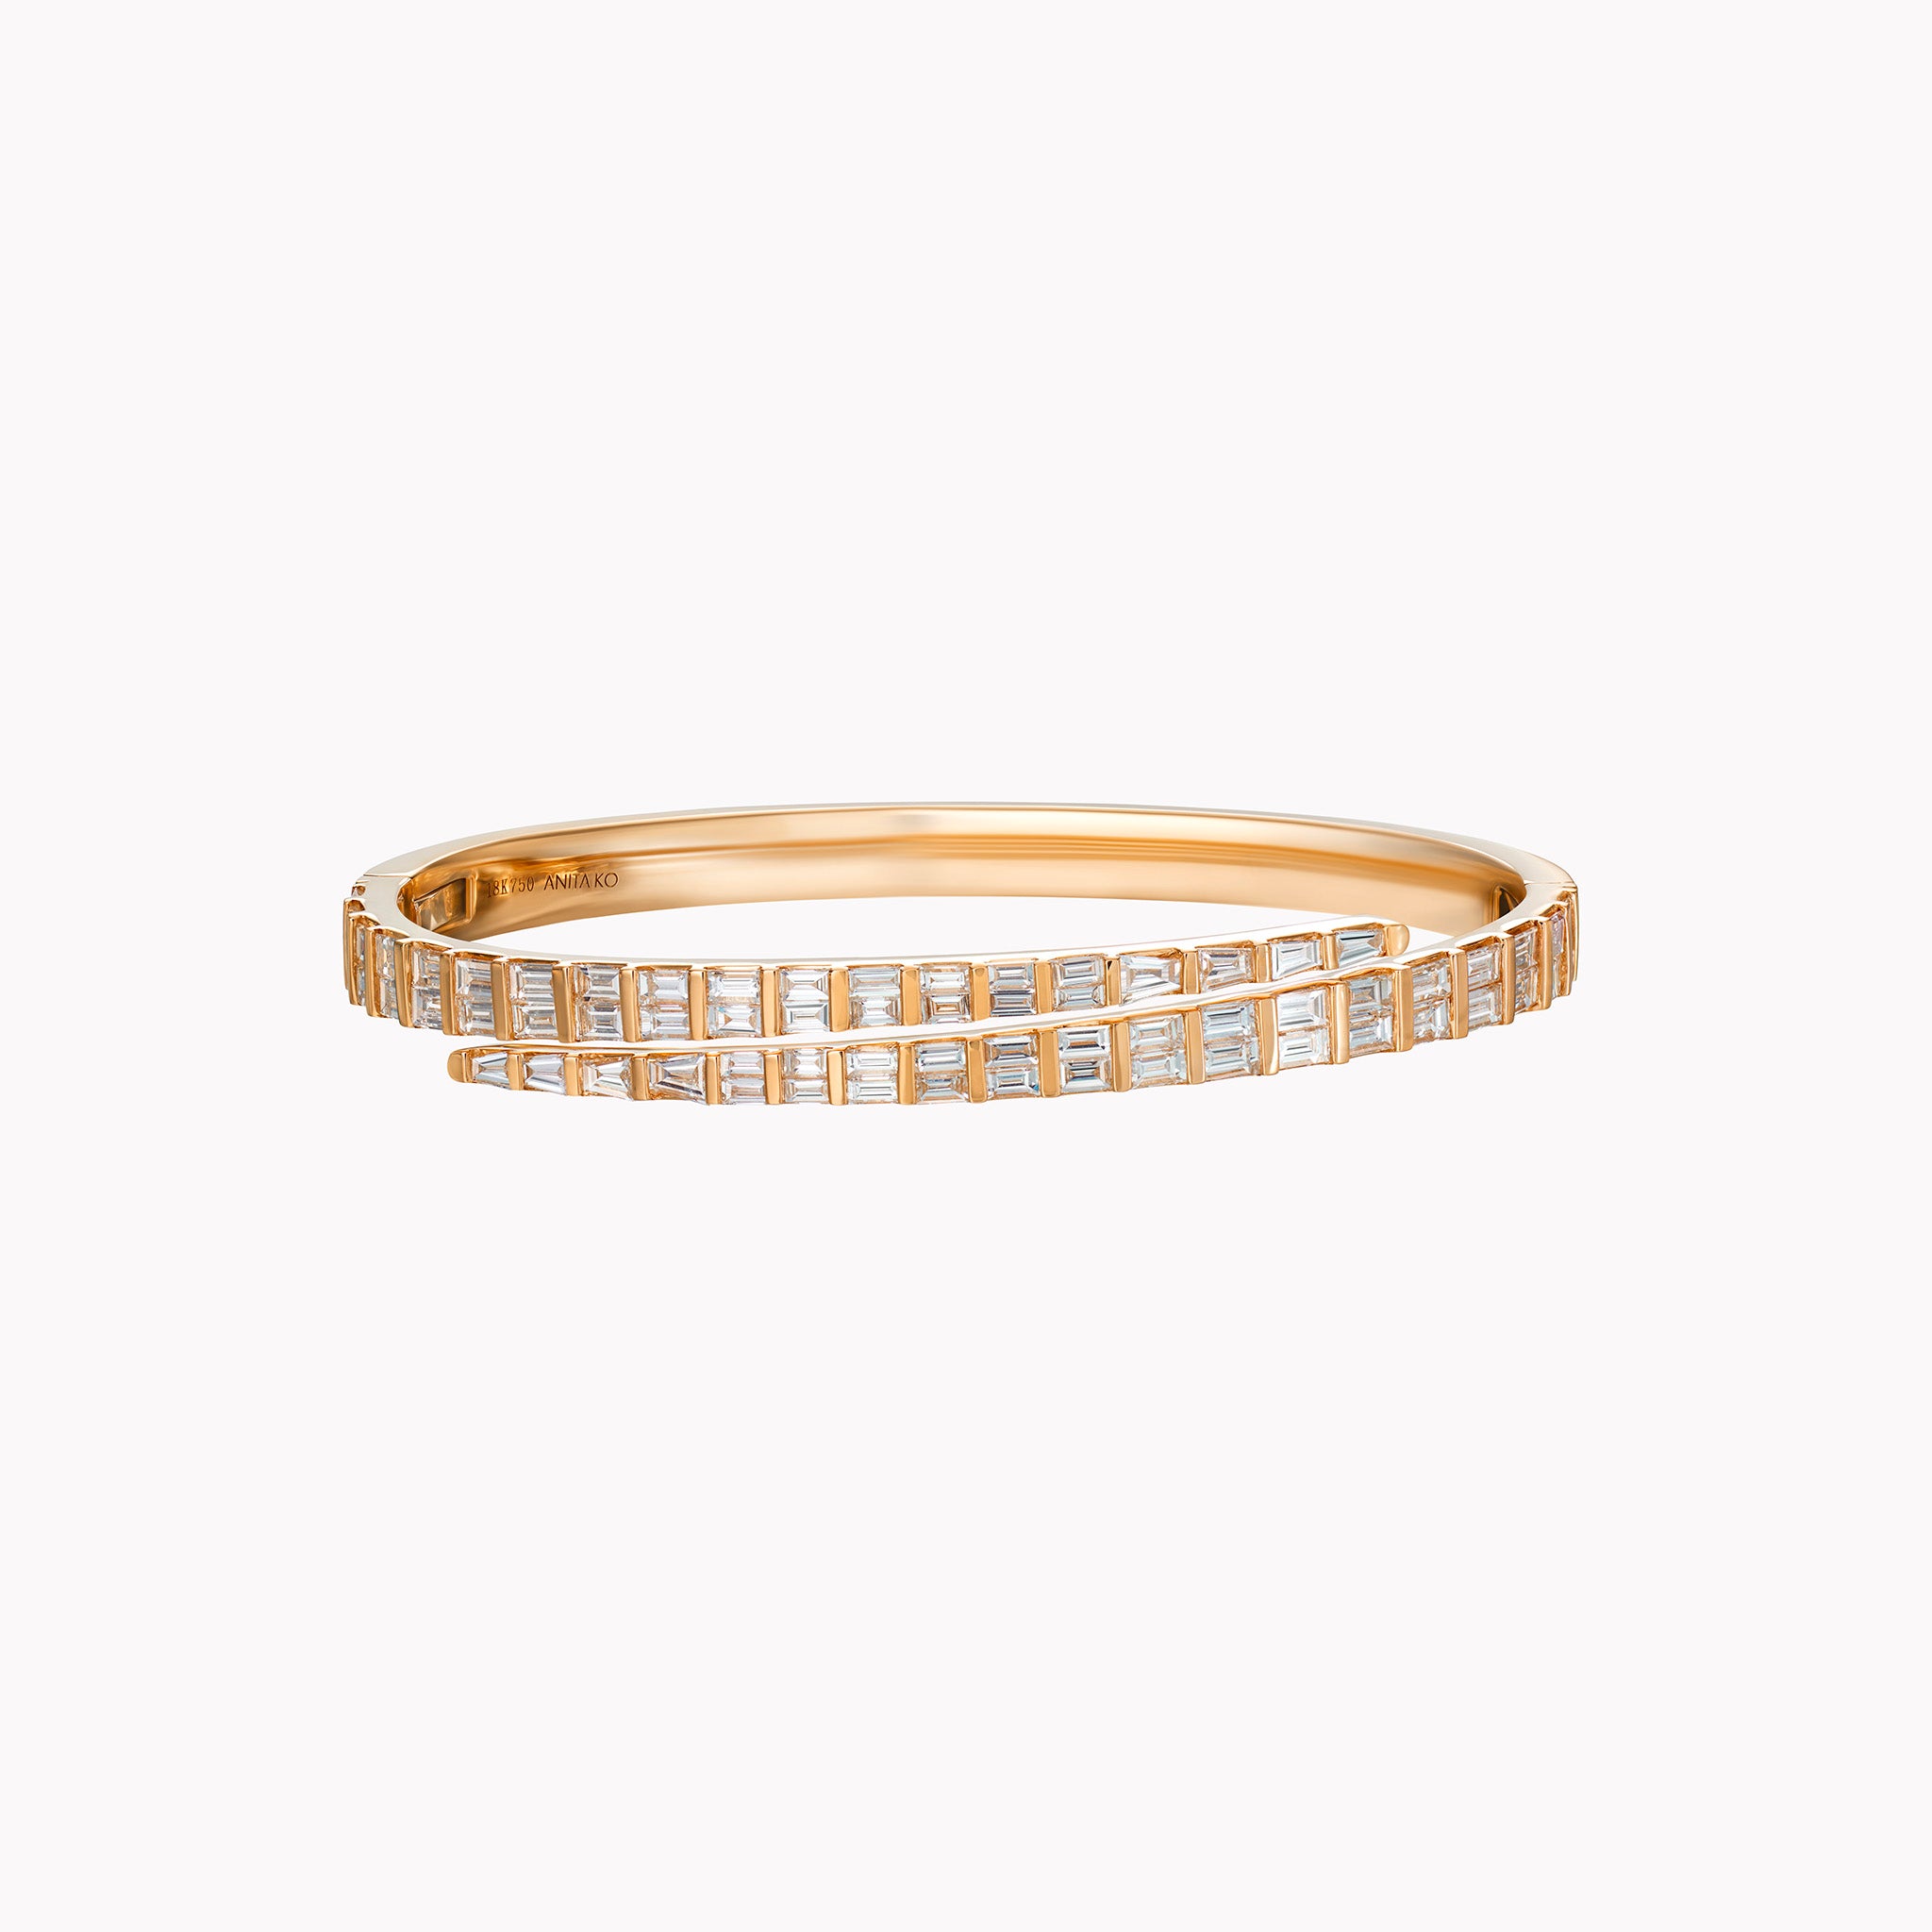 Baguette and Round Diamond Bracelet – Rothschild Diamond